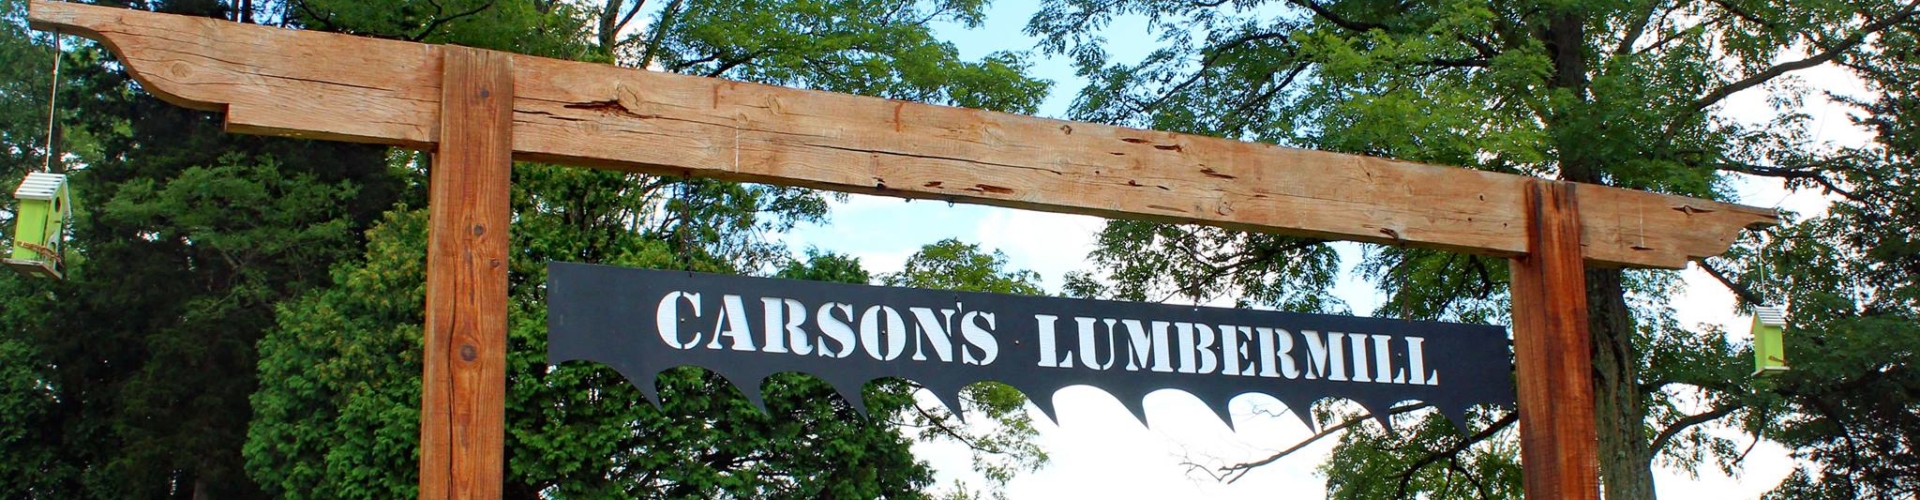 Carson's Lumbermill